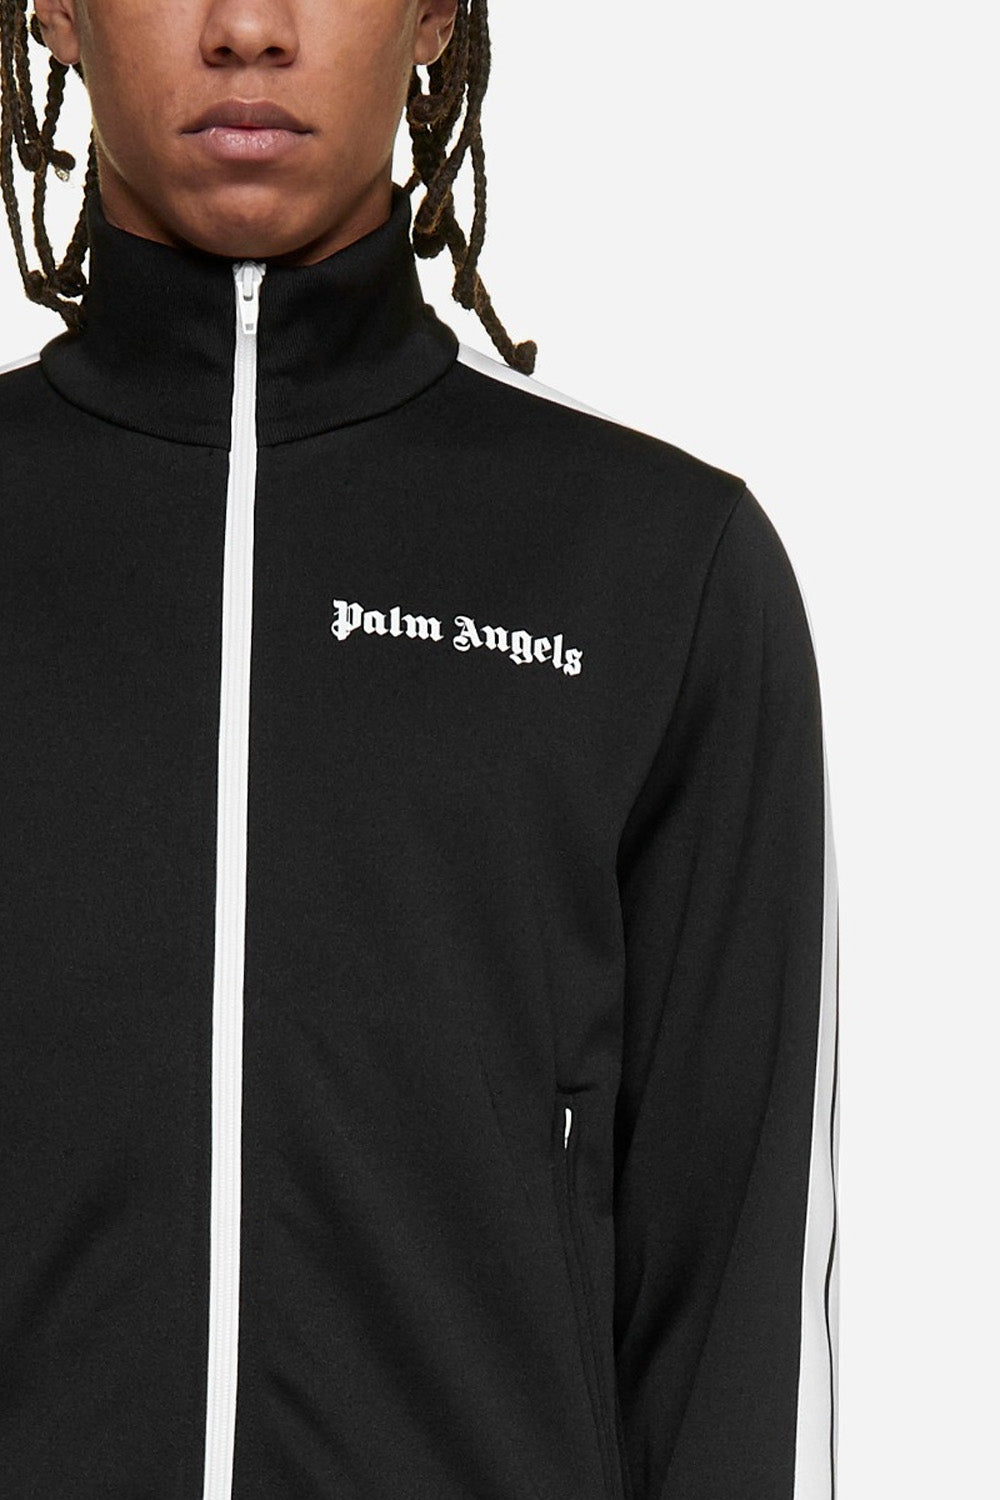 Palm Angels Classic side-stripe zipped jacket black